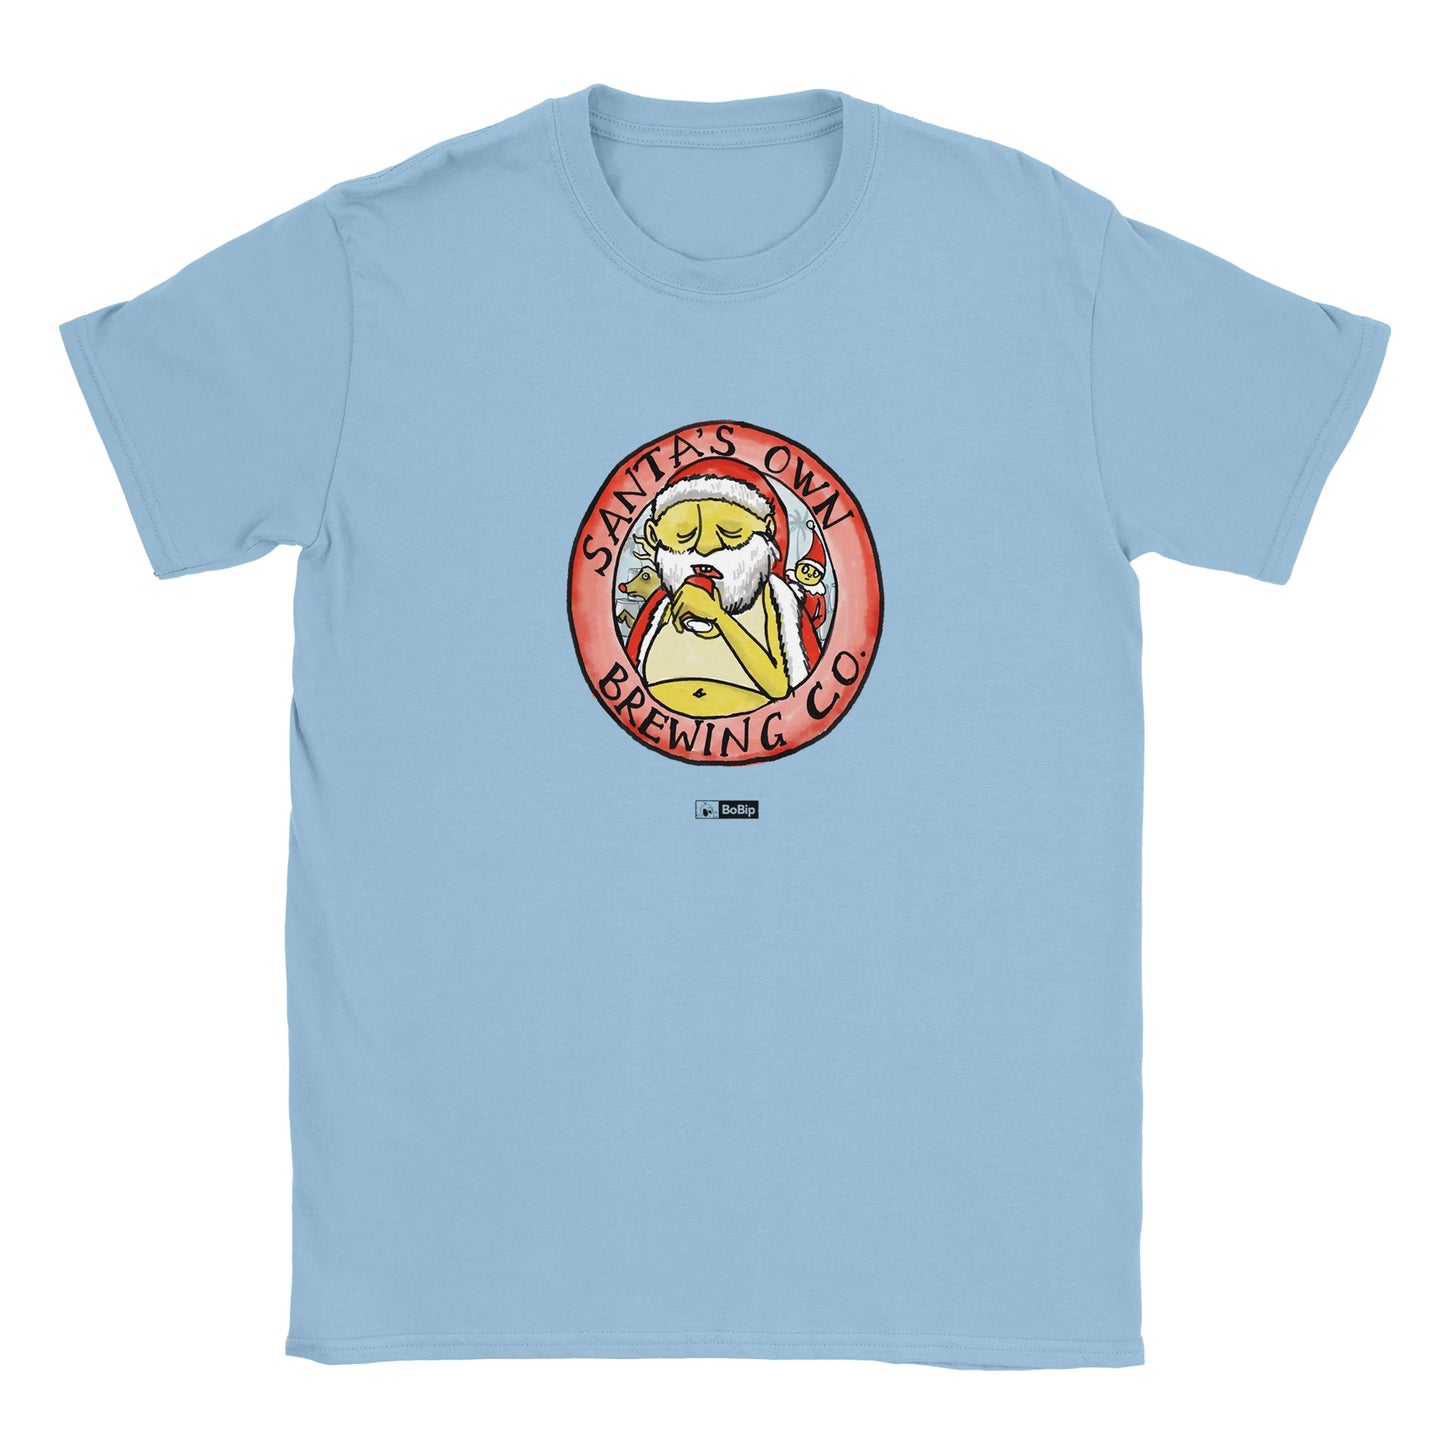 Santa's Own Brewing Co. - Unisex Crewneck T-shirt